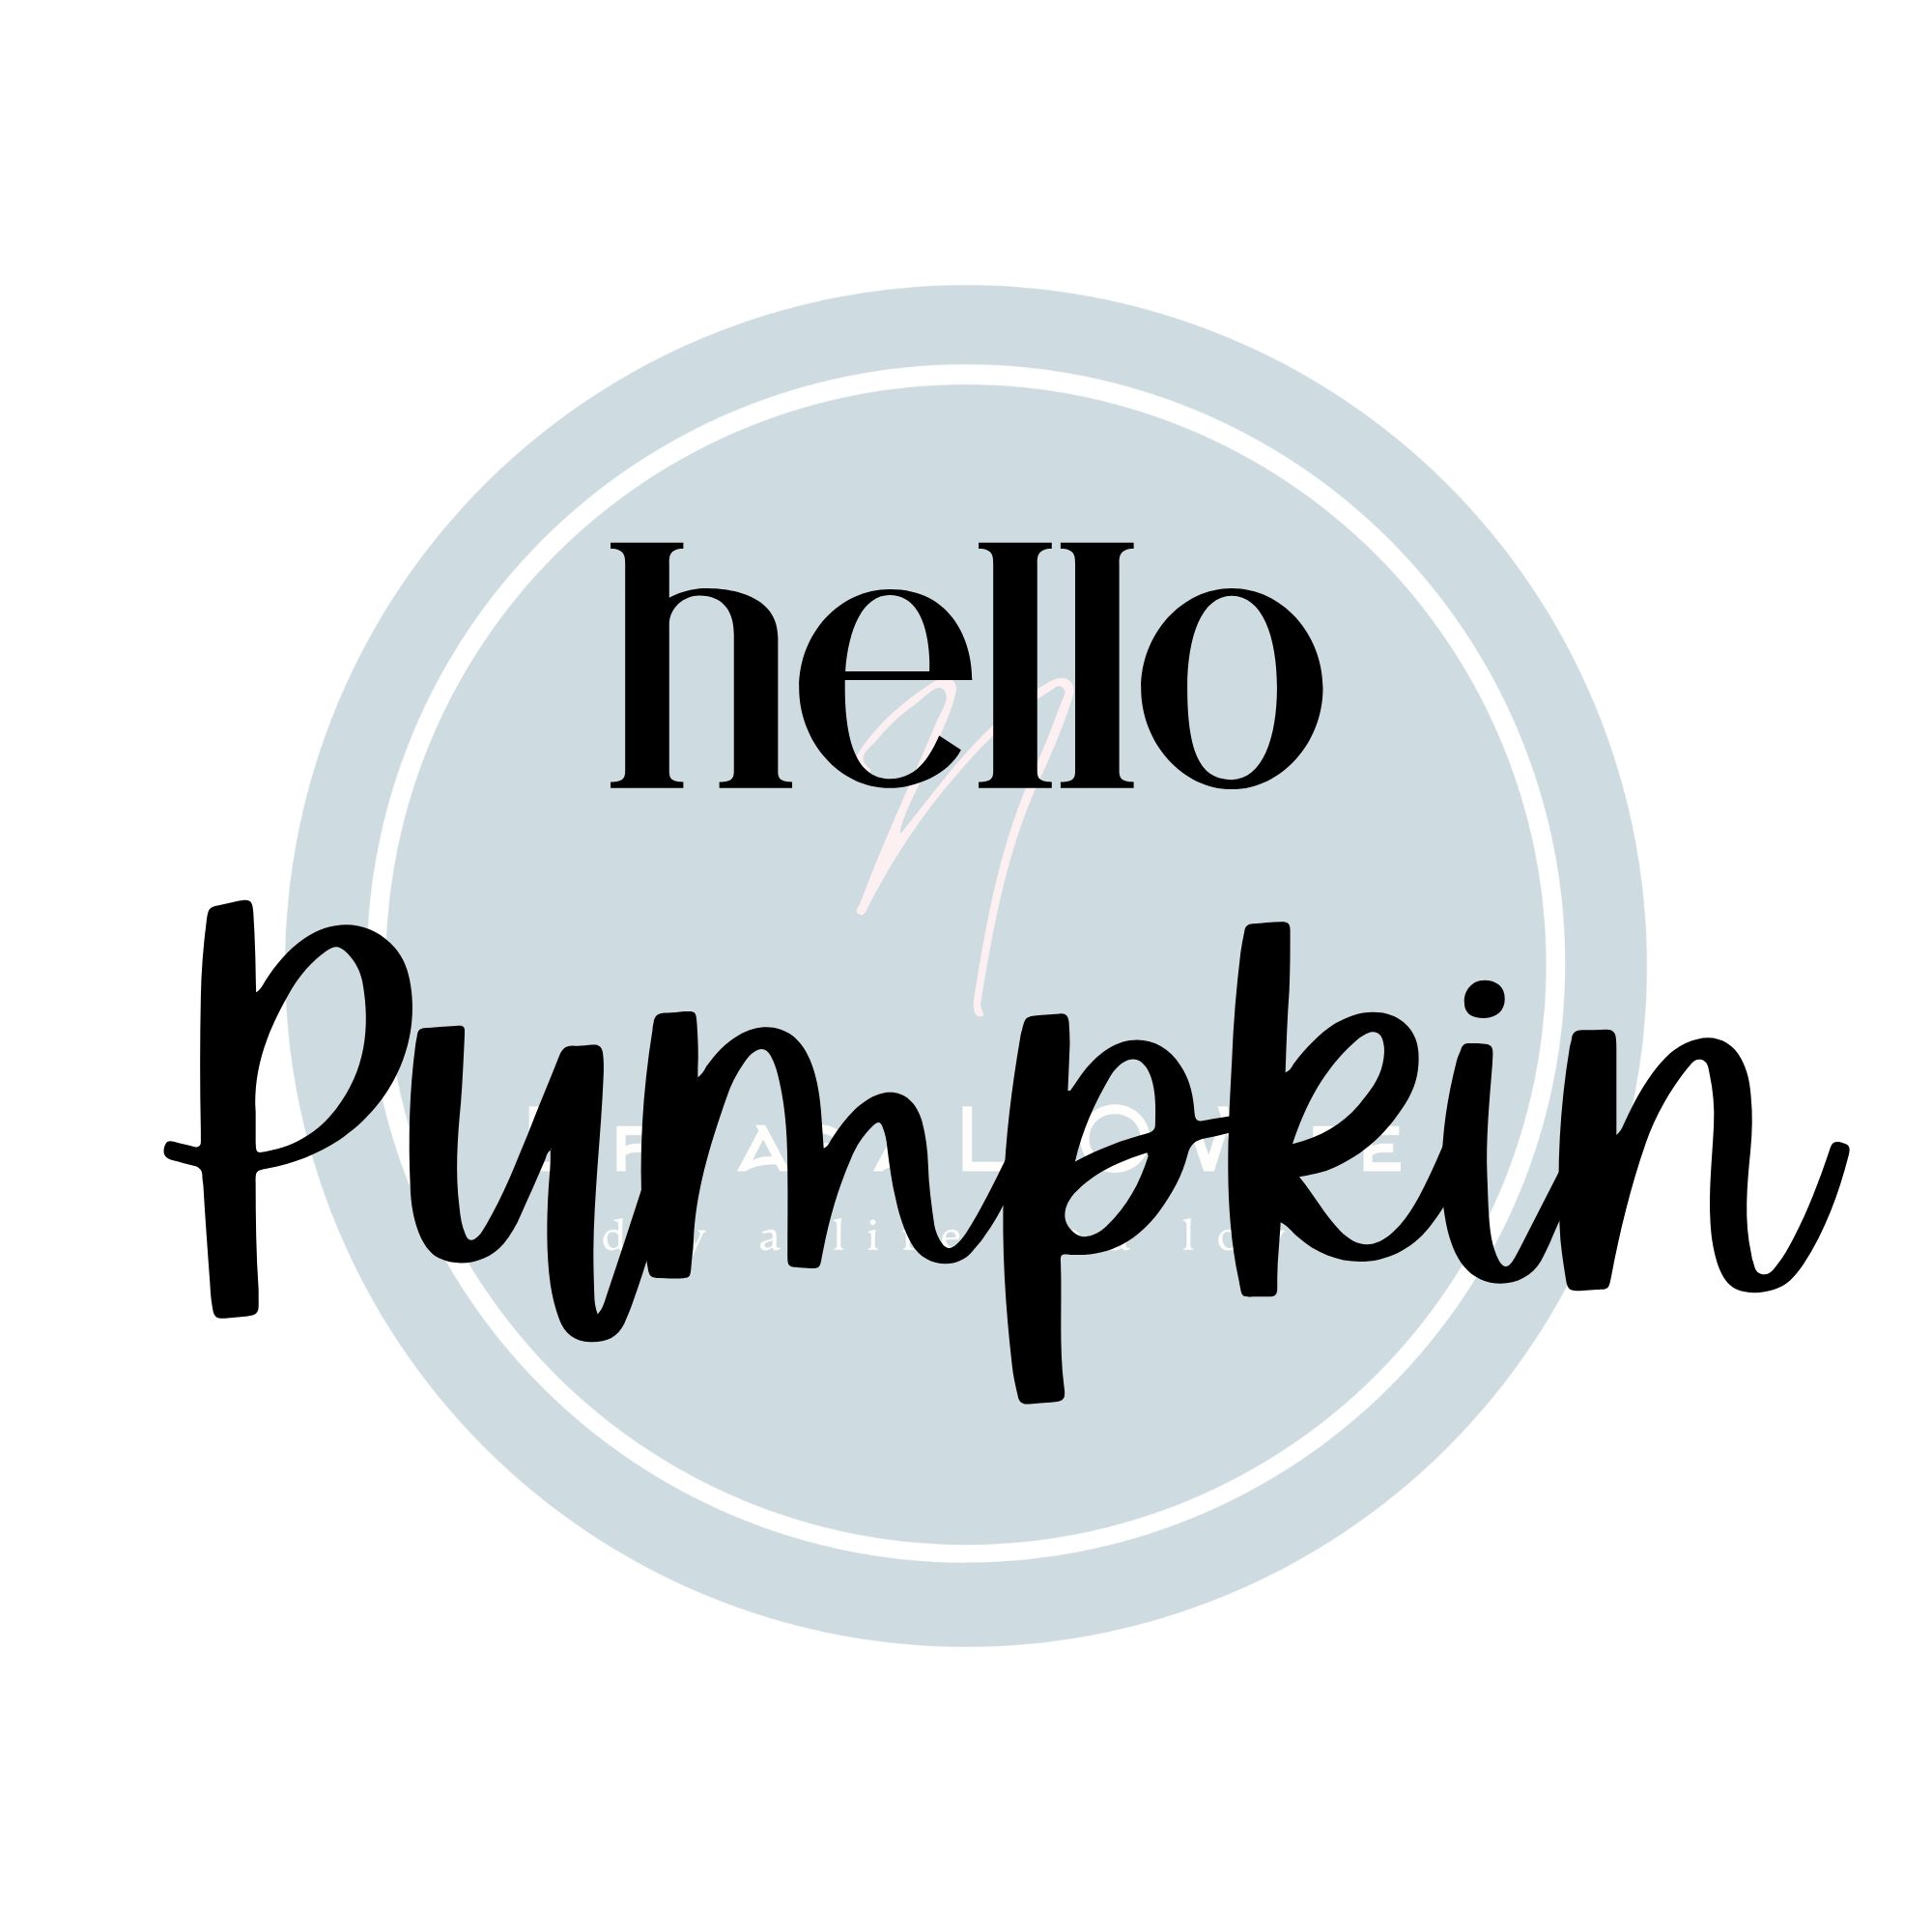 Design for the fall sign, "hello pumpkin."